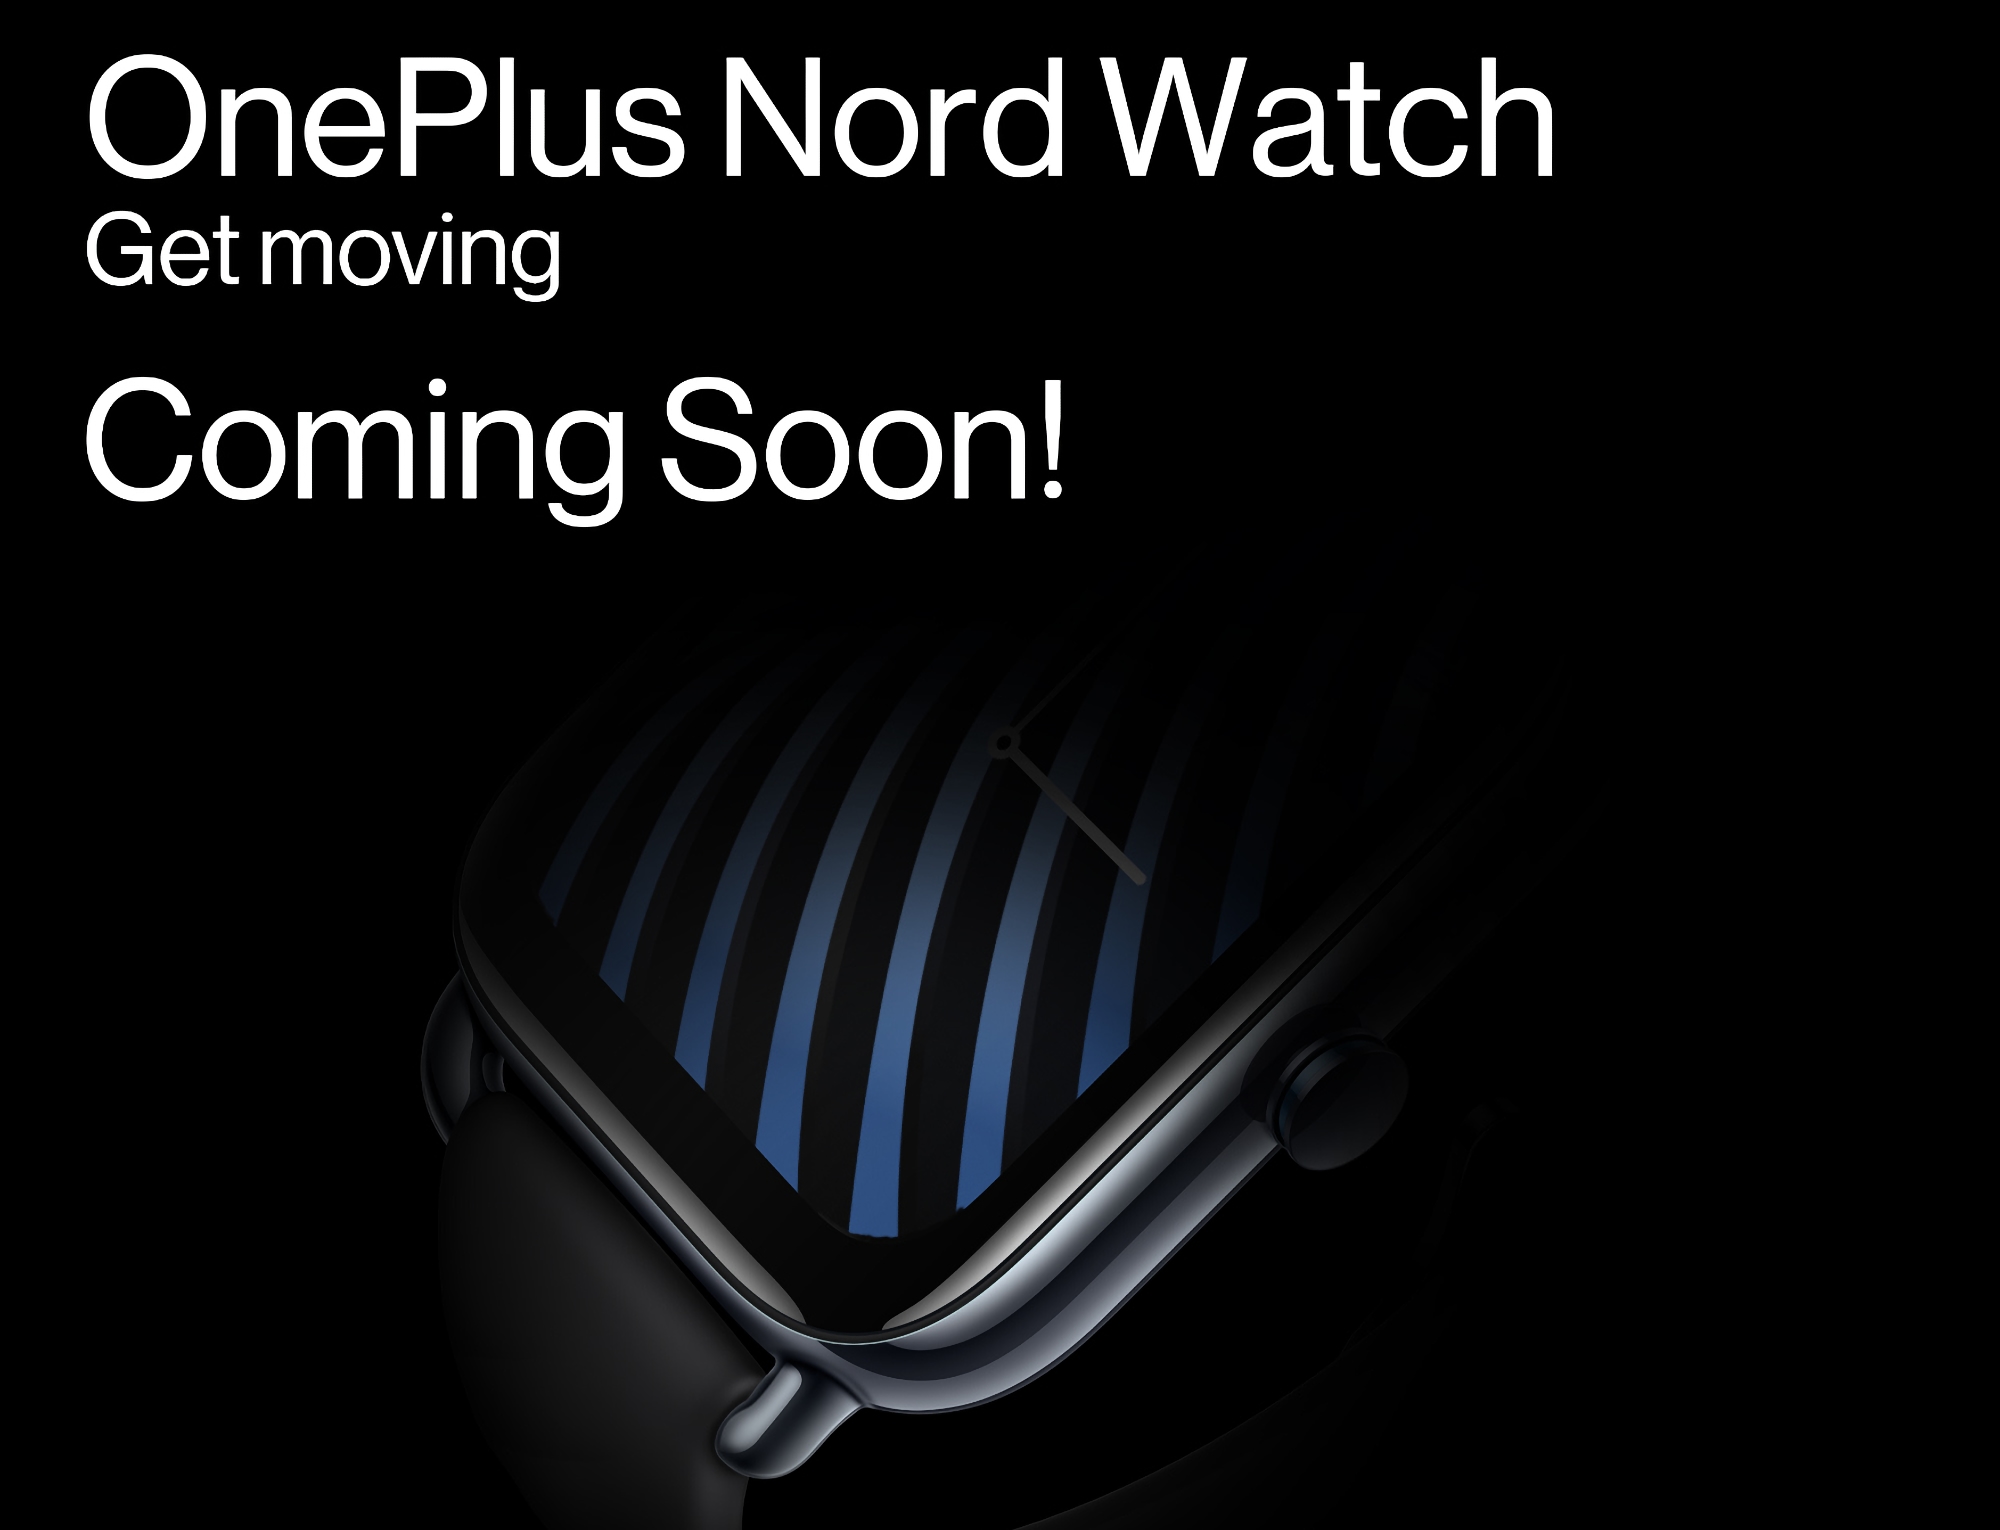 Анонс близько: OnePlus почала тизерити вихід смарт-годинника Nord Watch